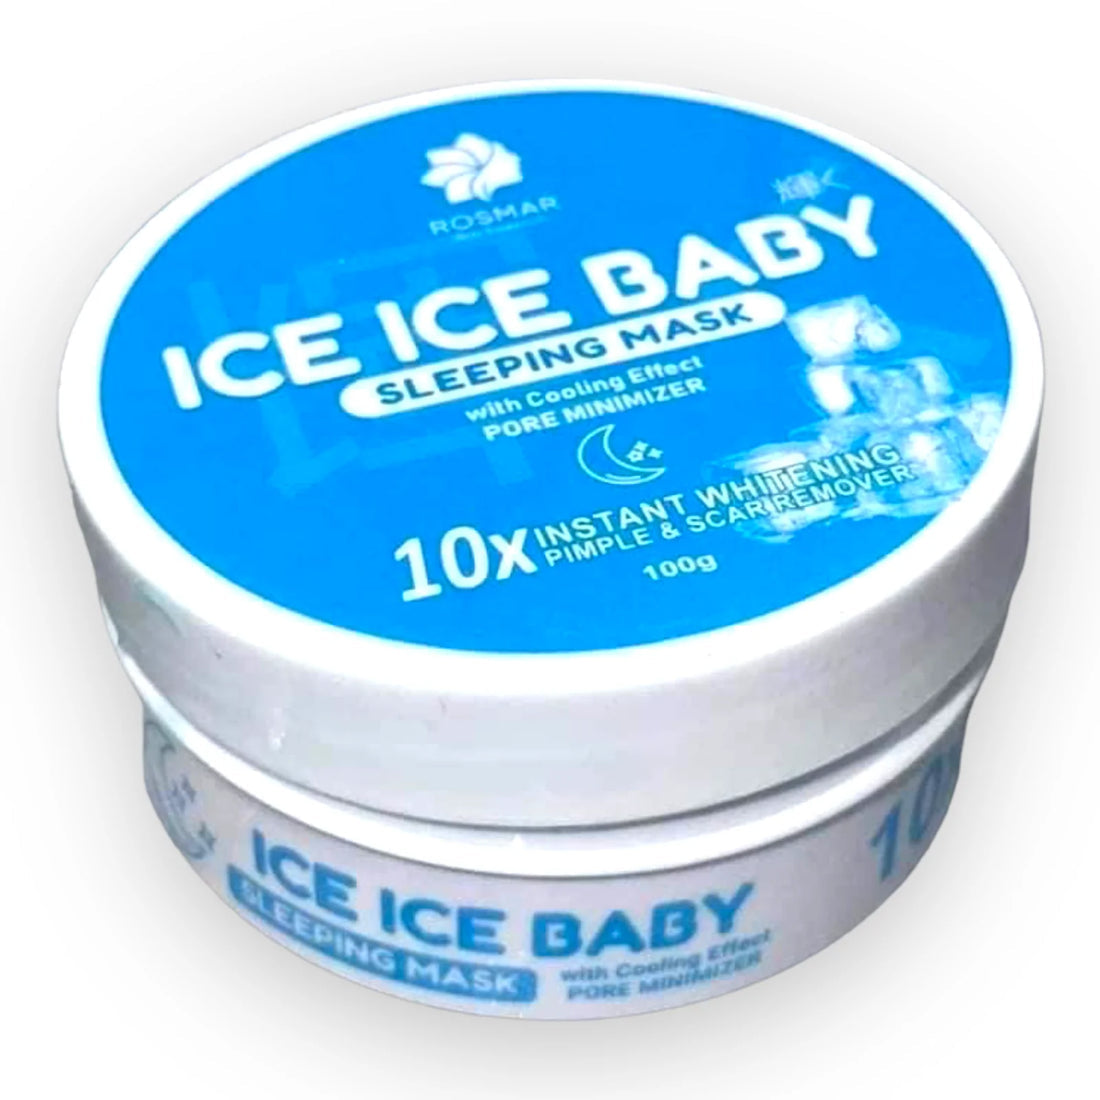 Rosmar Ice Ice Baby Sleeping Mask - True Beauty Skin Essentials